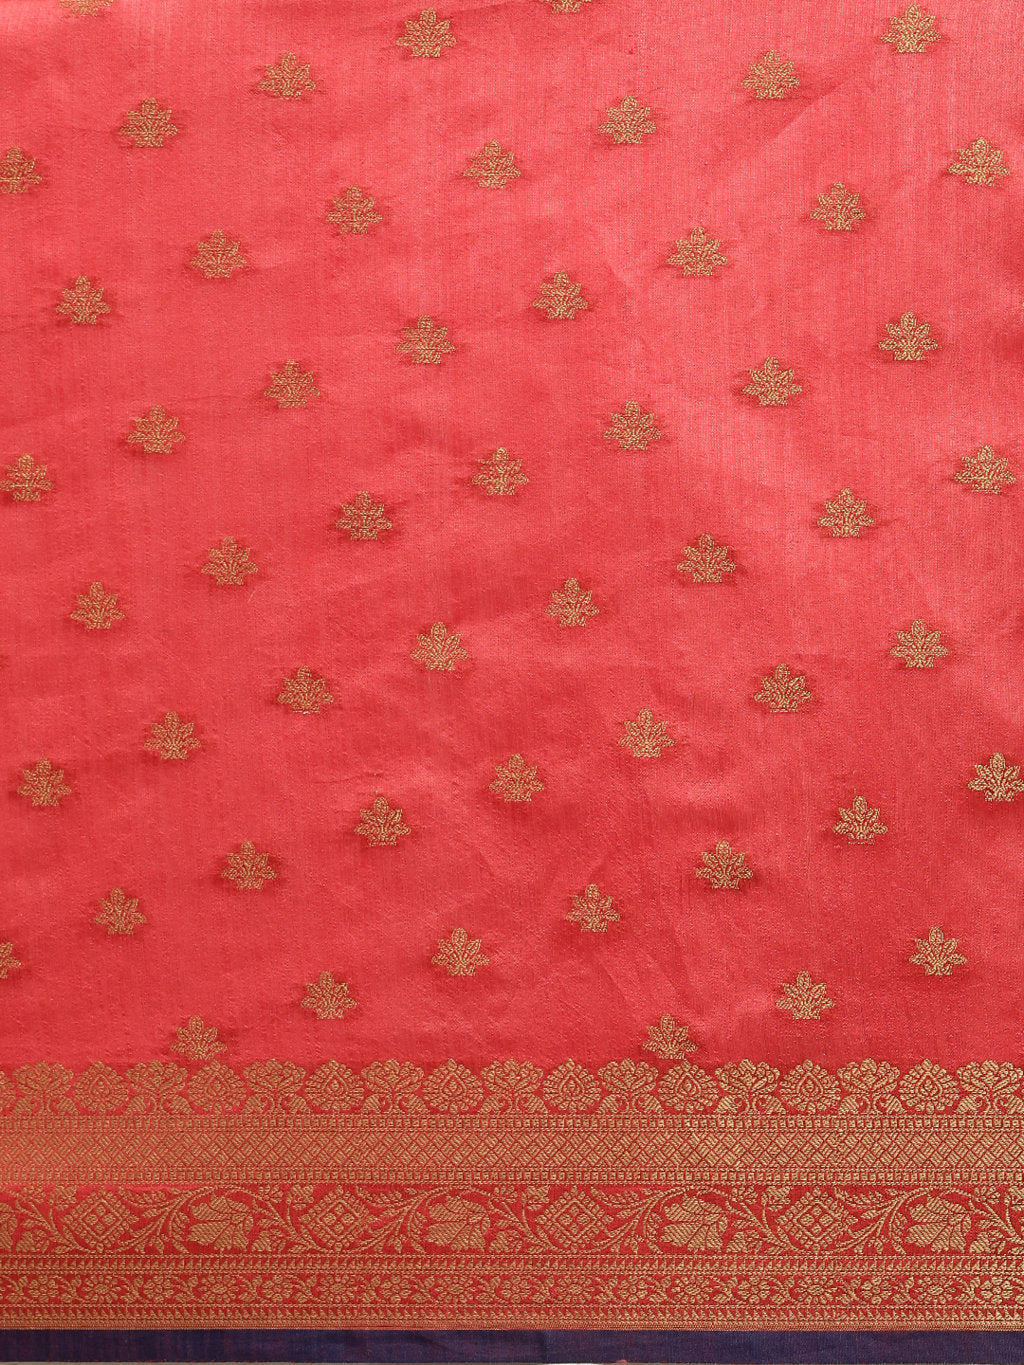 Women's Pink Handloom Silk Jacquard Traditional Saree - Sangam Prints